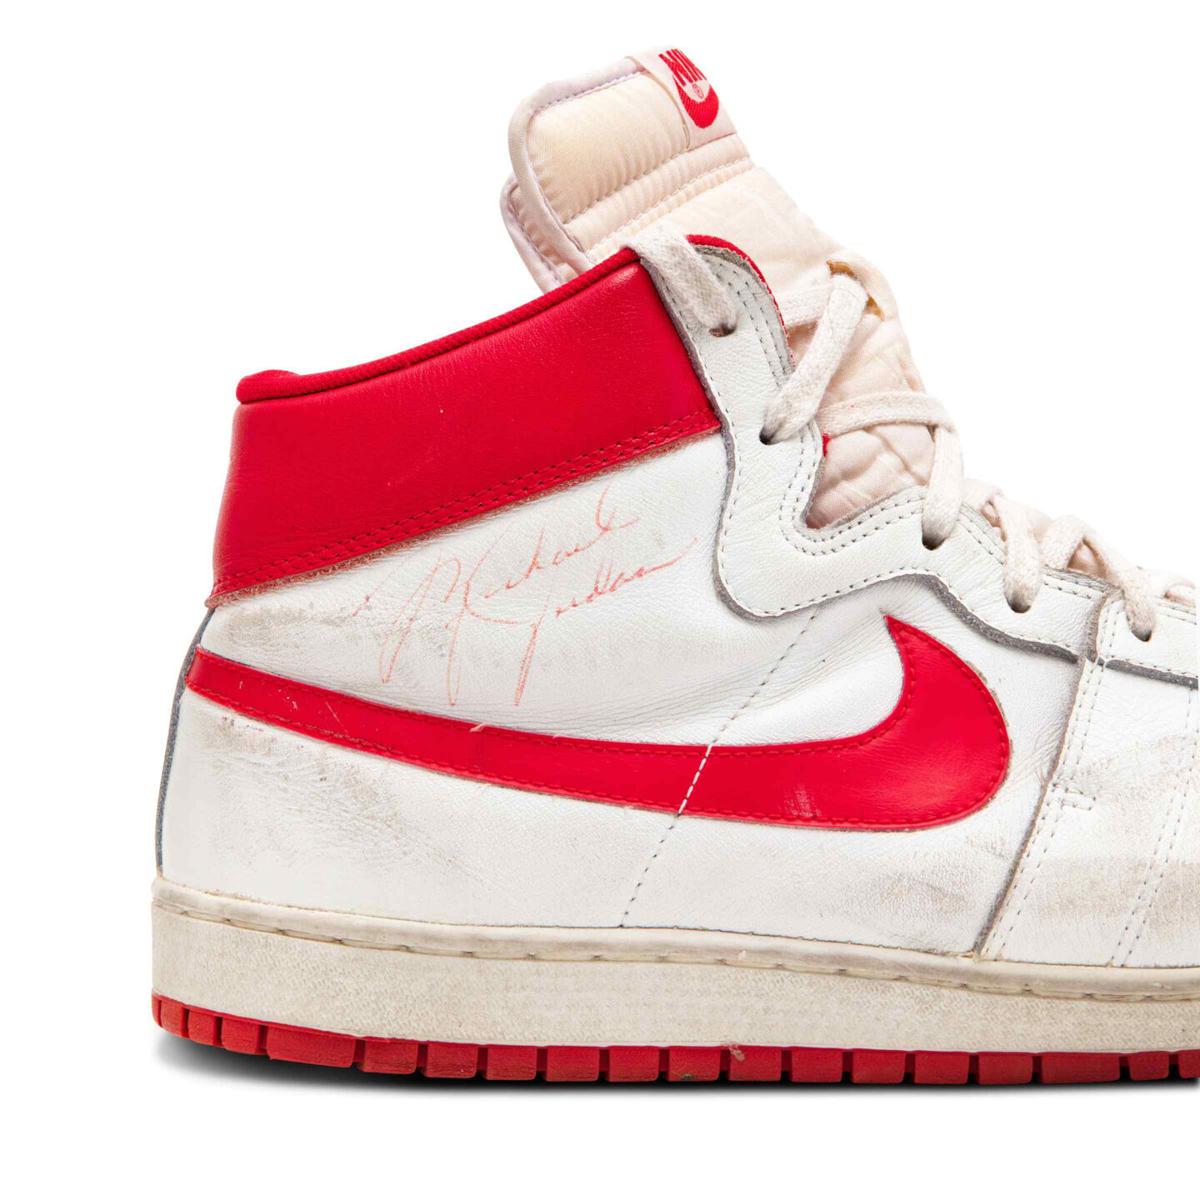 Michael Jordan's sneakers sell for record-breaking $1.47 million